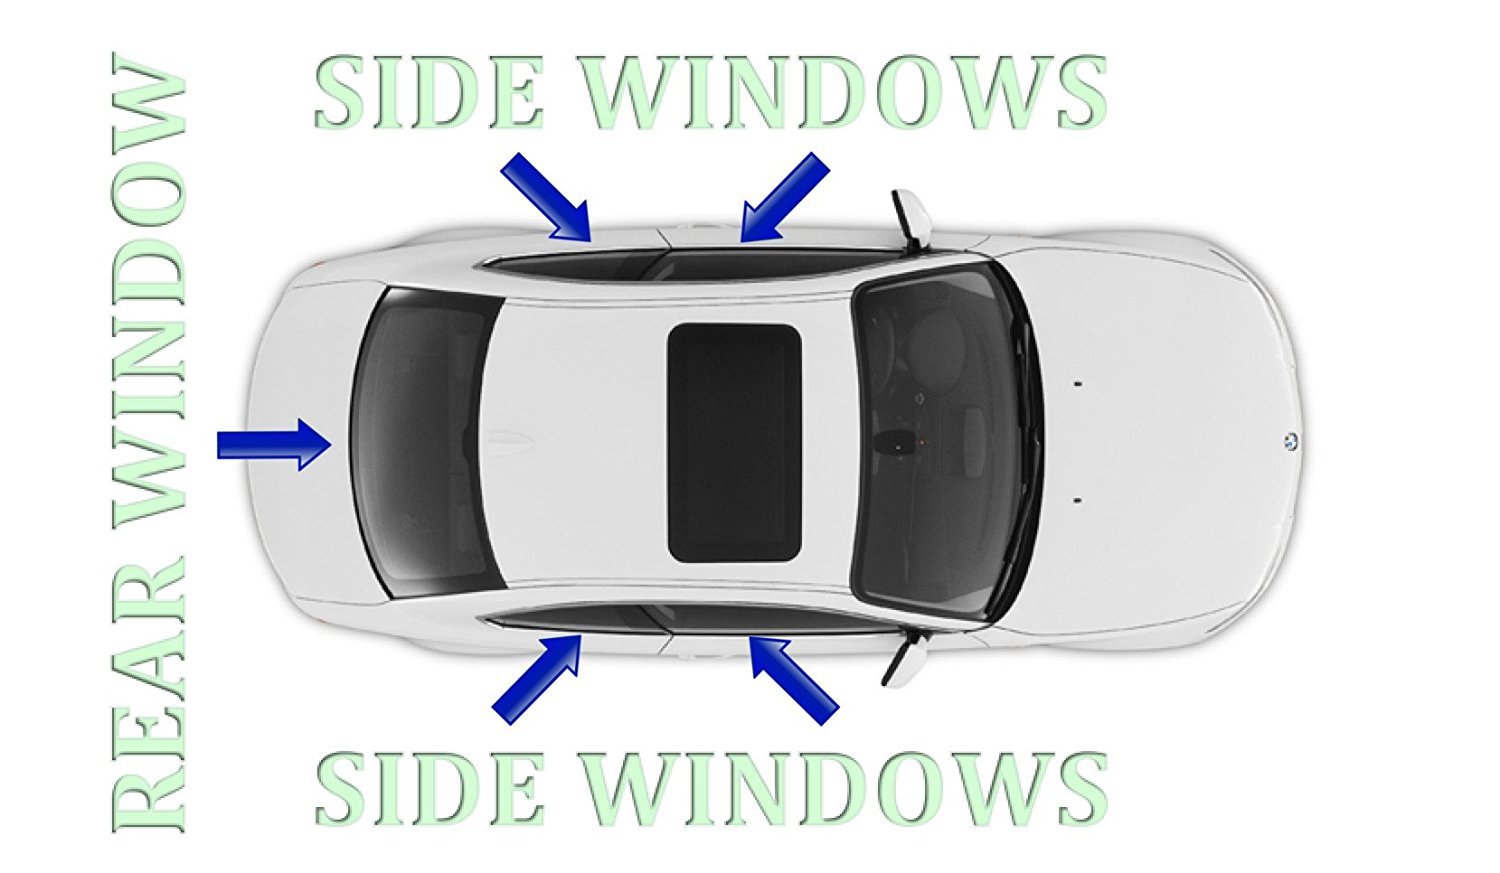 Autotech Park Precut Window Tinting Film for 2009-2014 Nissan Murano SUV